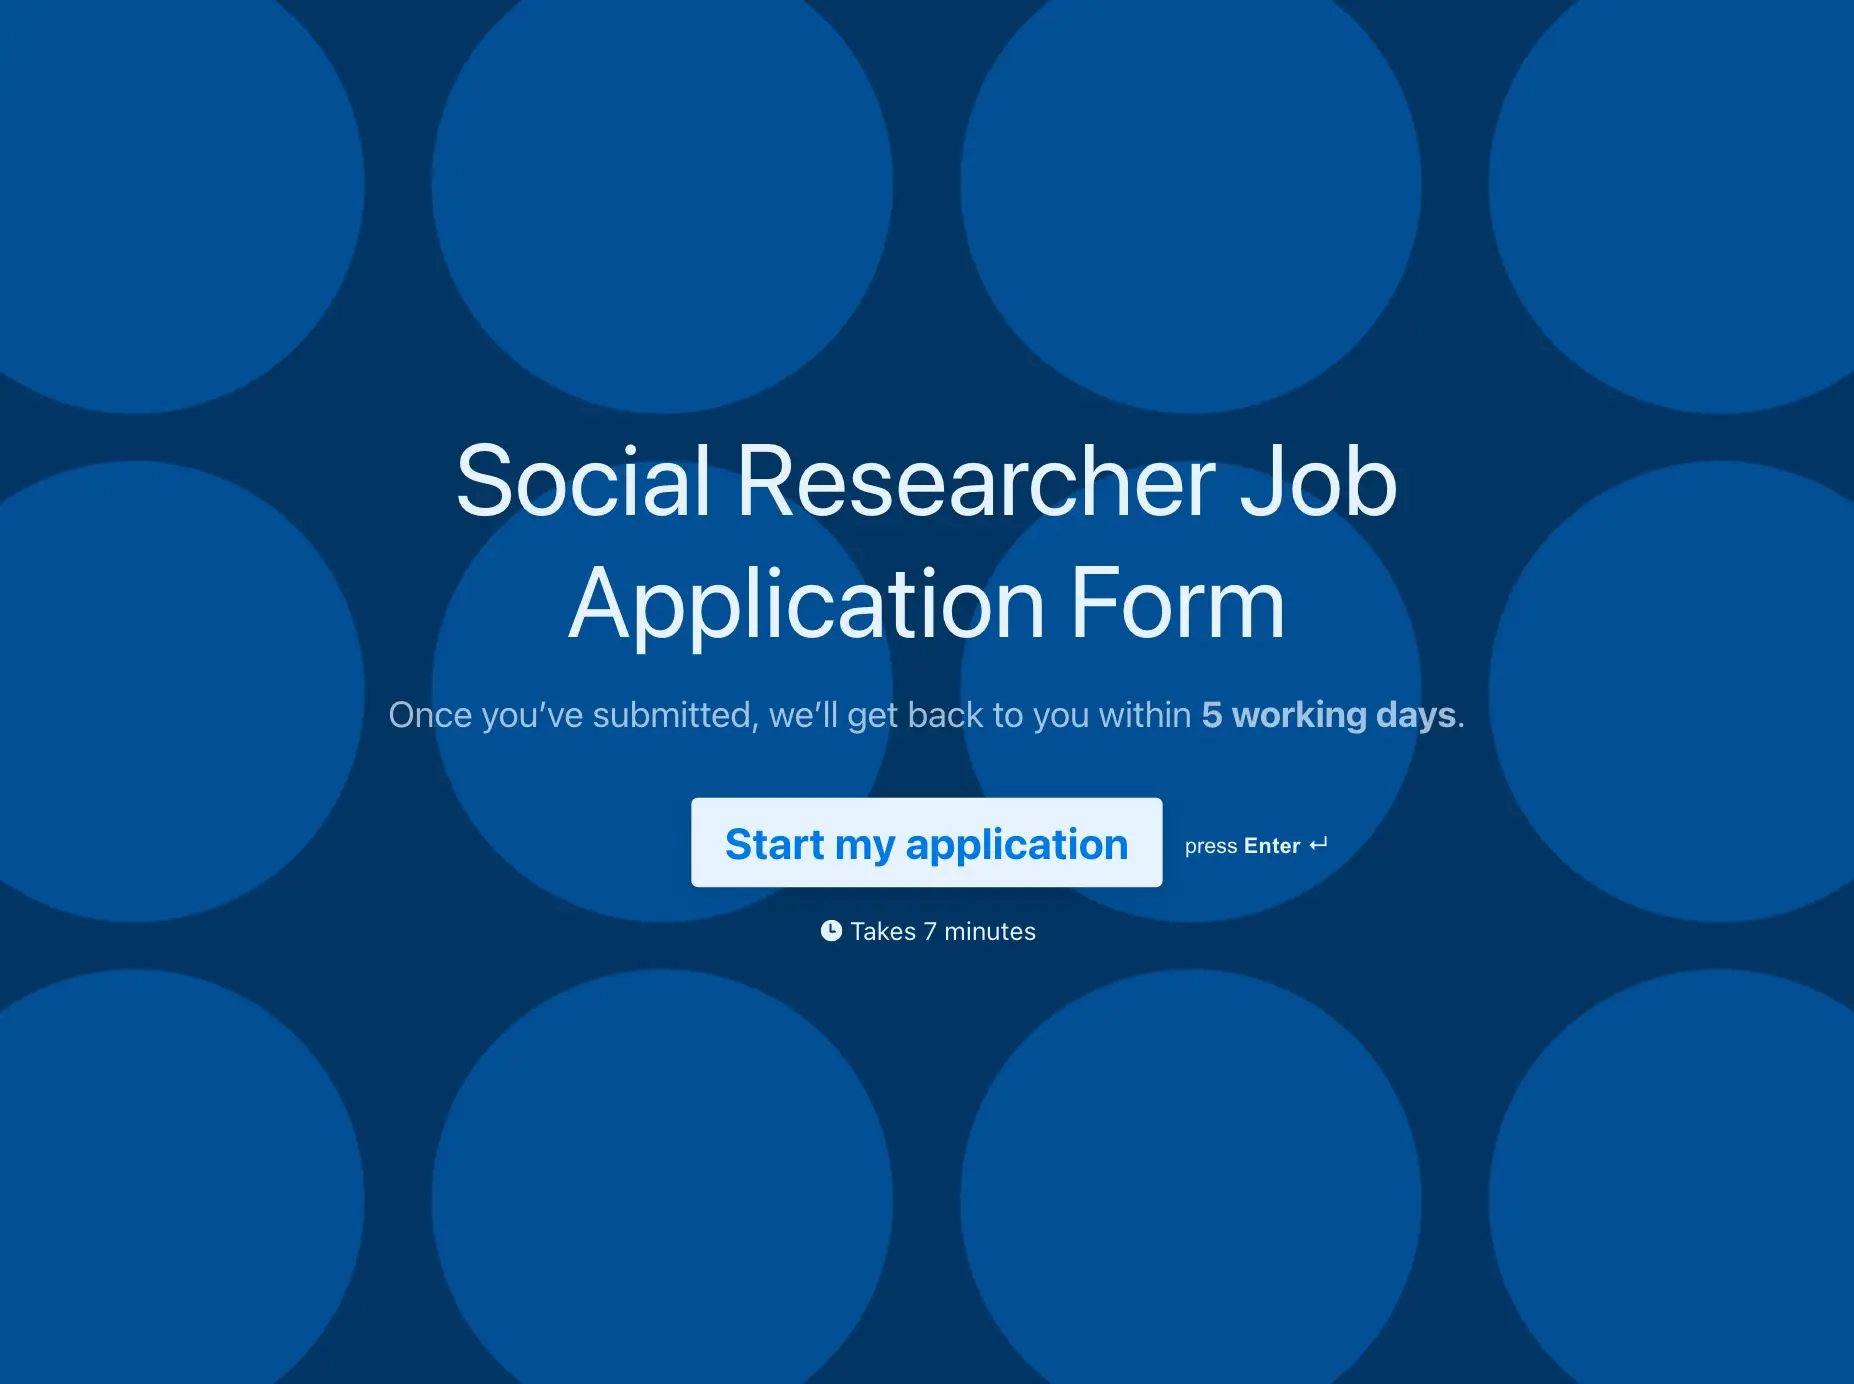 Social Researcher Job Application Form Template Hero